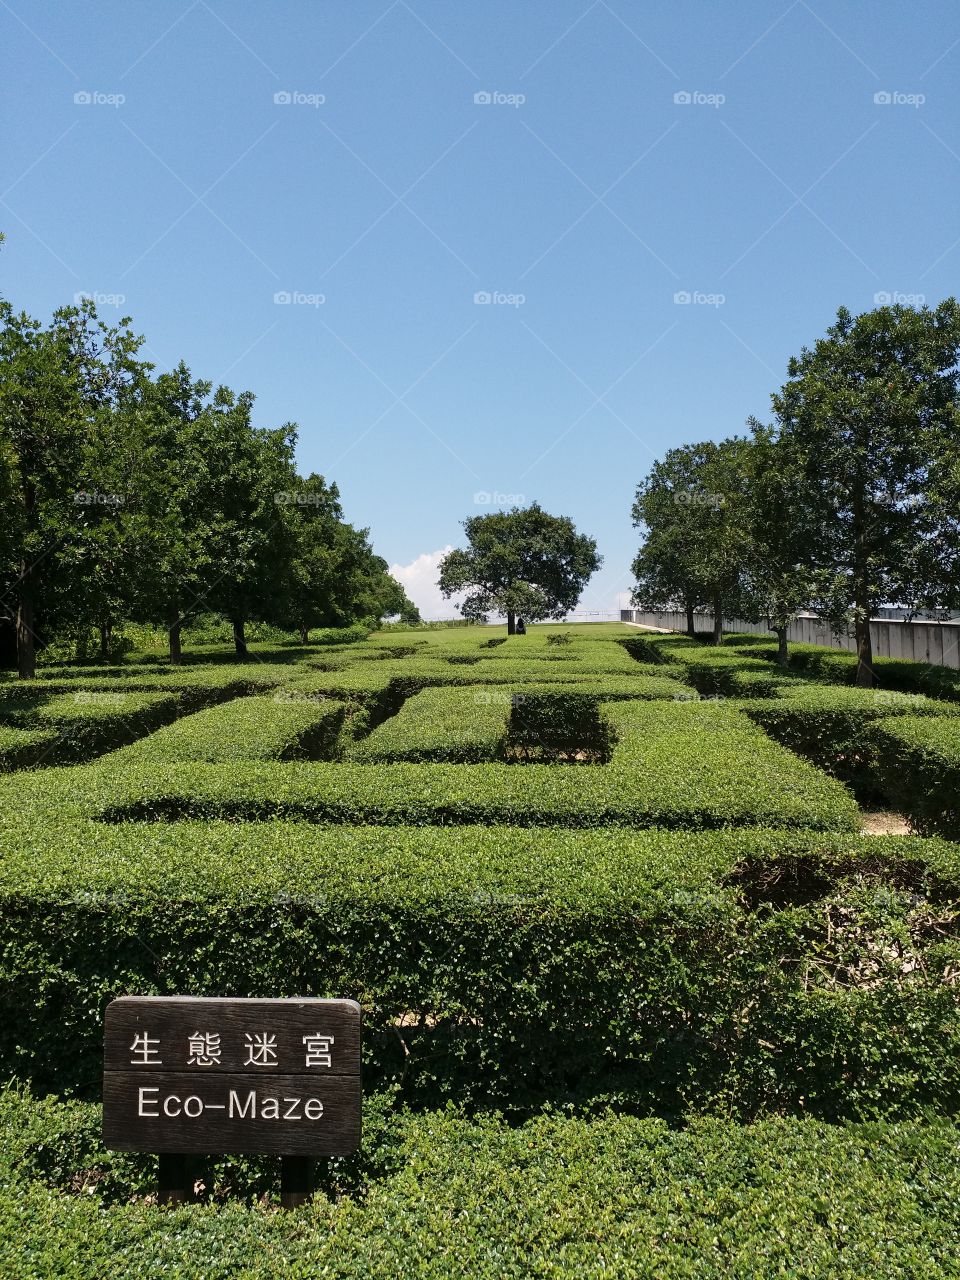 hedge maze, HK wetlands park